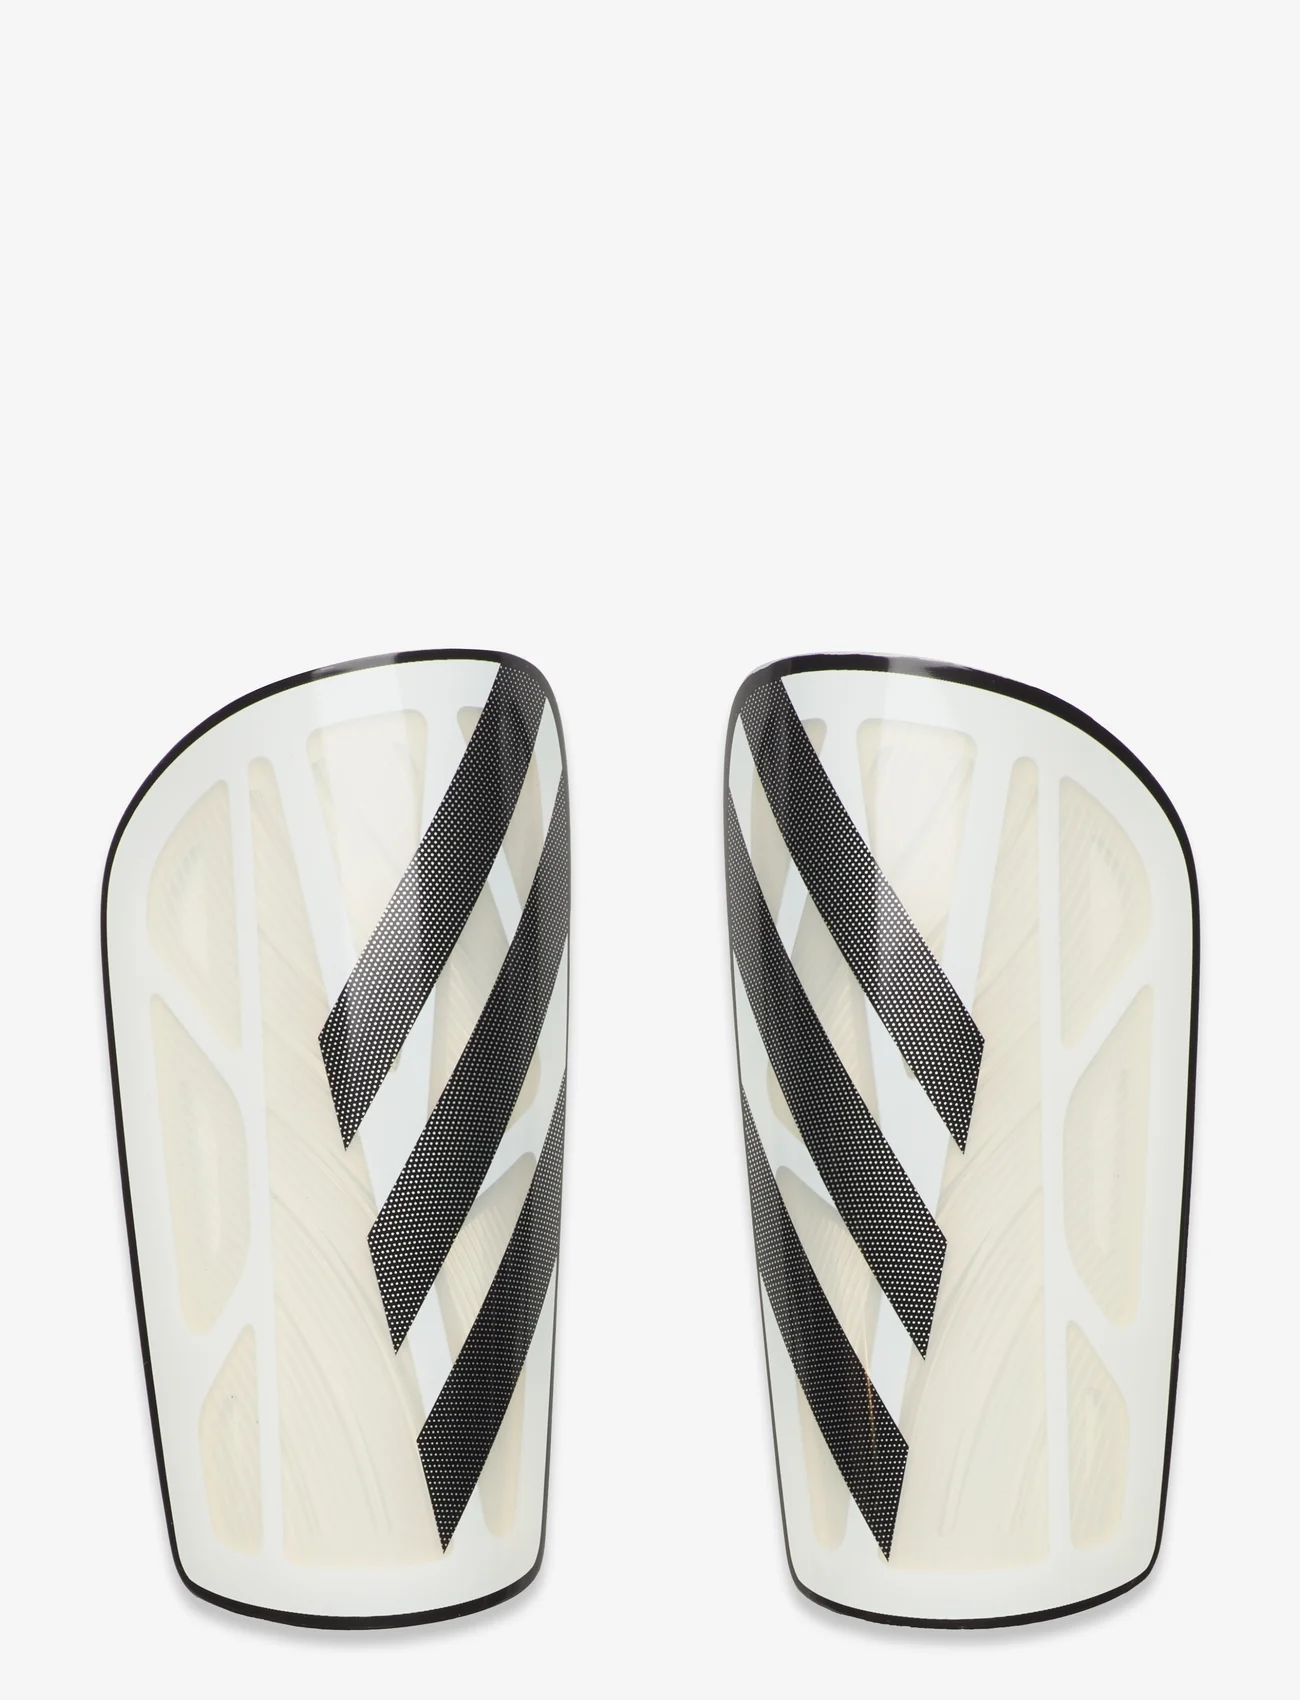 adidas Performance - TIRO SHINGUARD LEAGUE - laveste priser - white/black/silvmt - 0